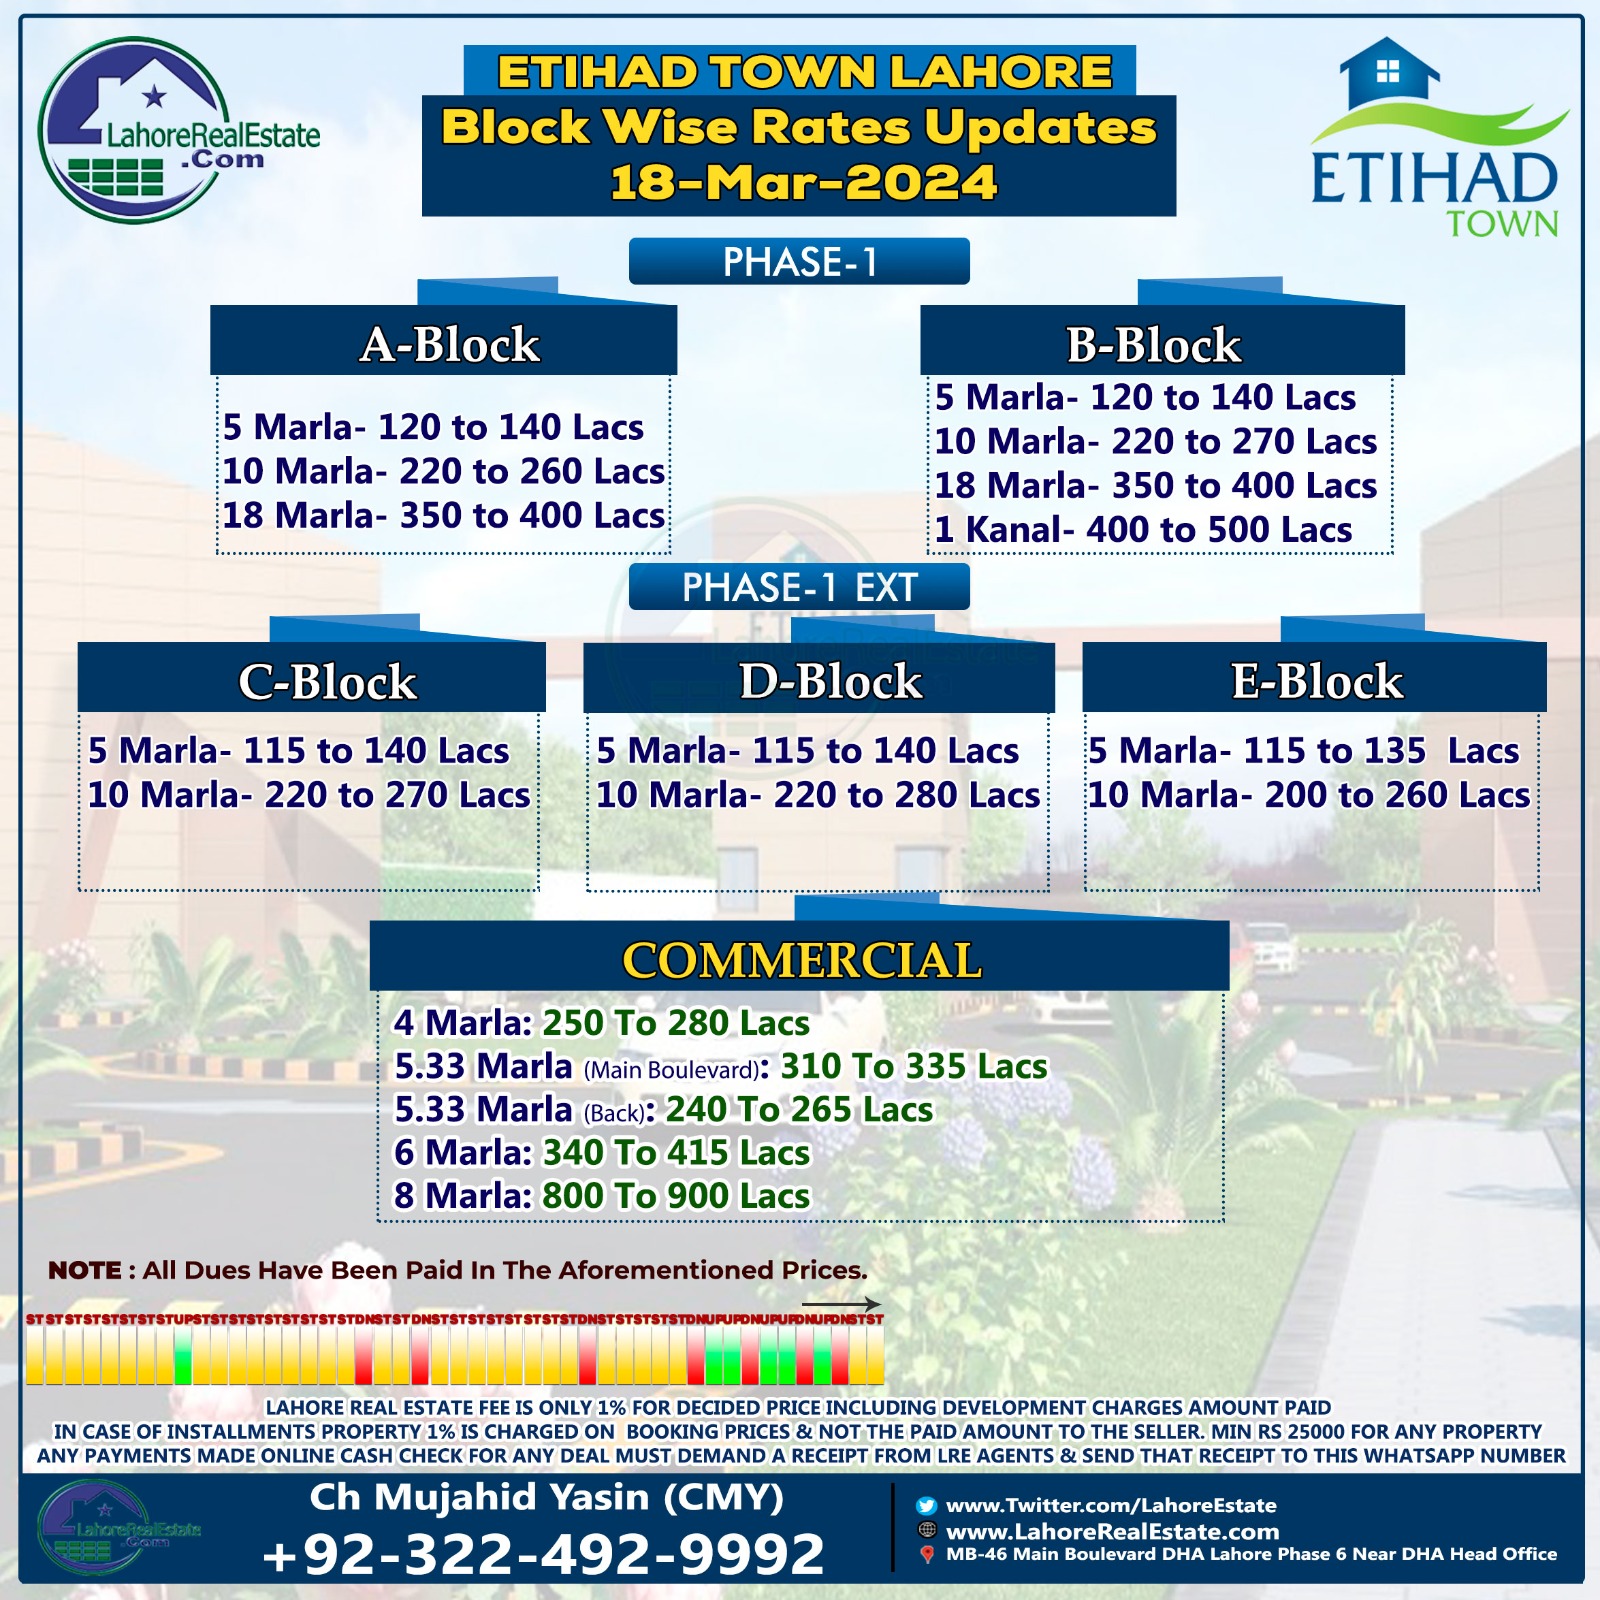 Etihad Town Lahore Plot Prices Update March 20, 2024